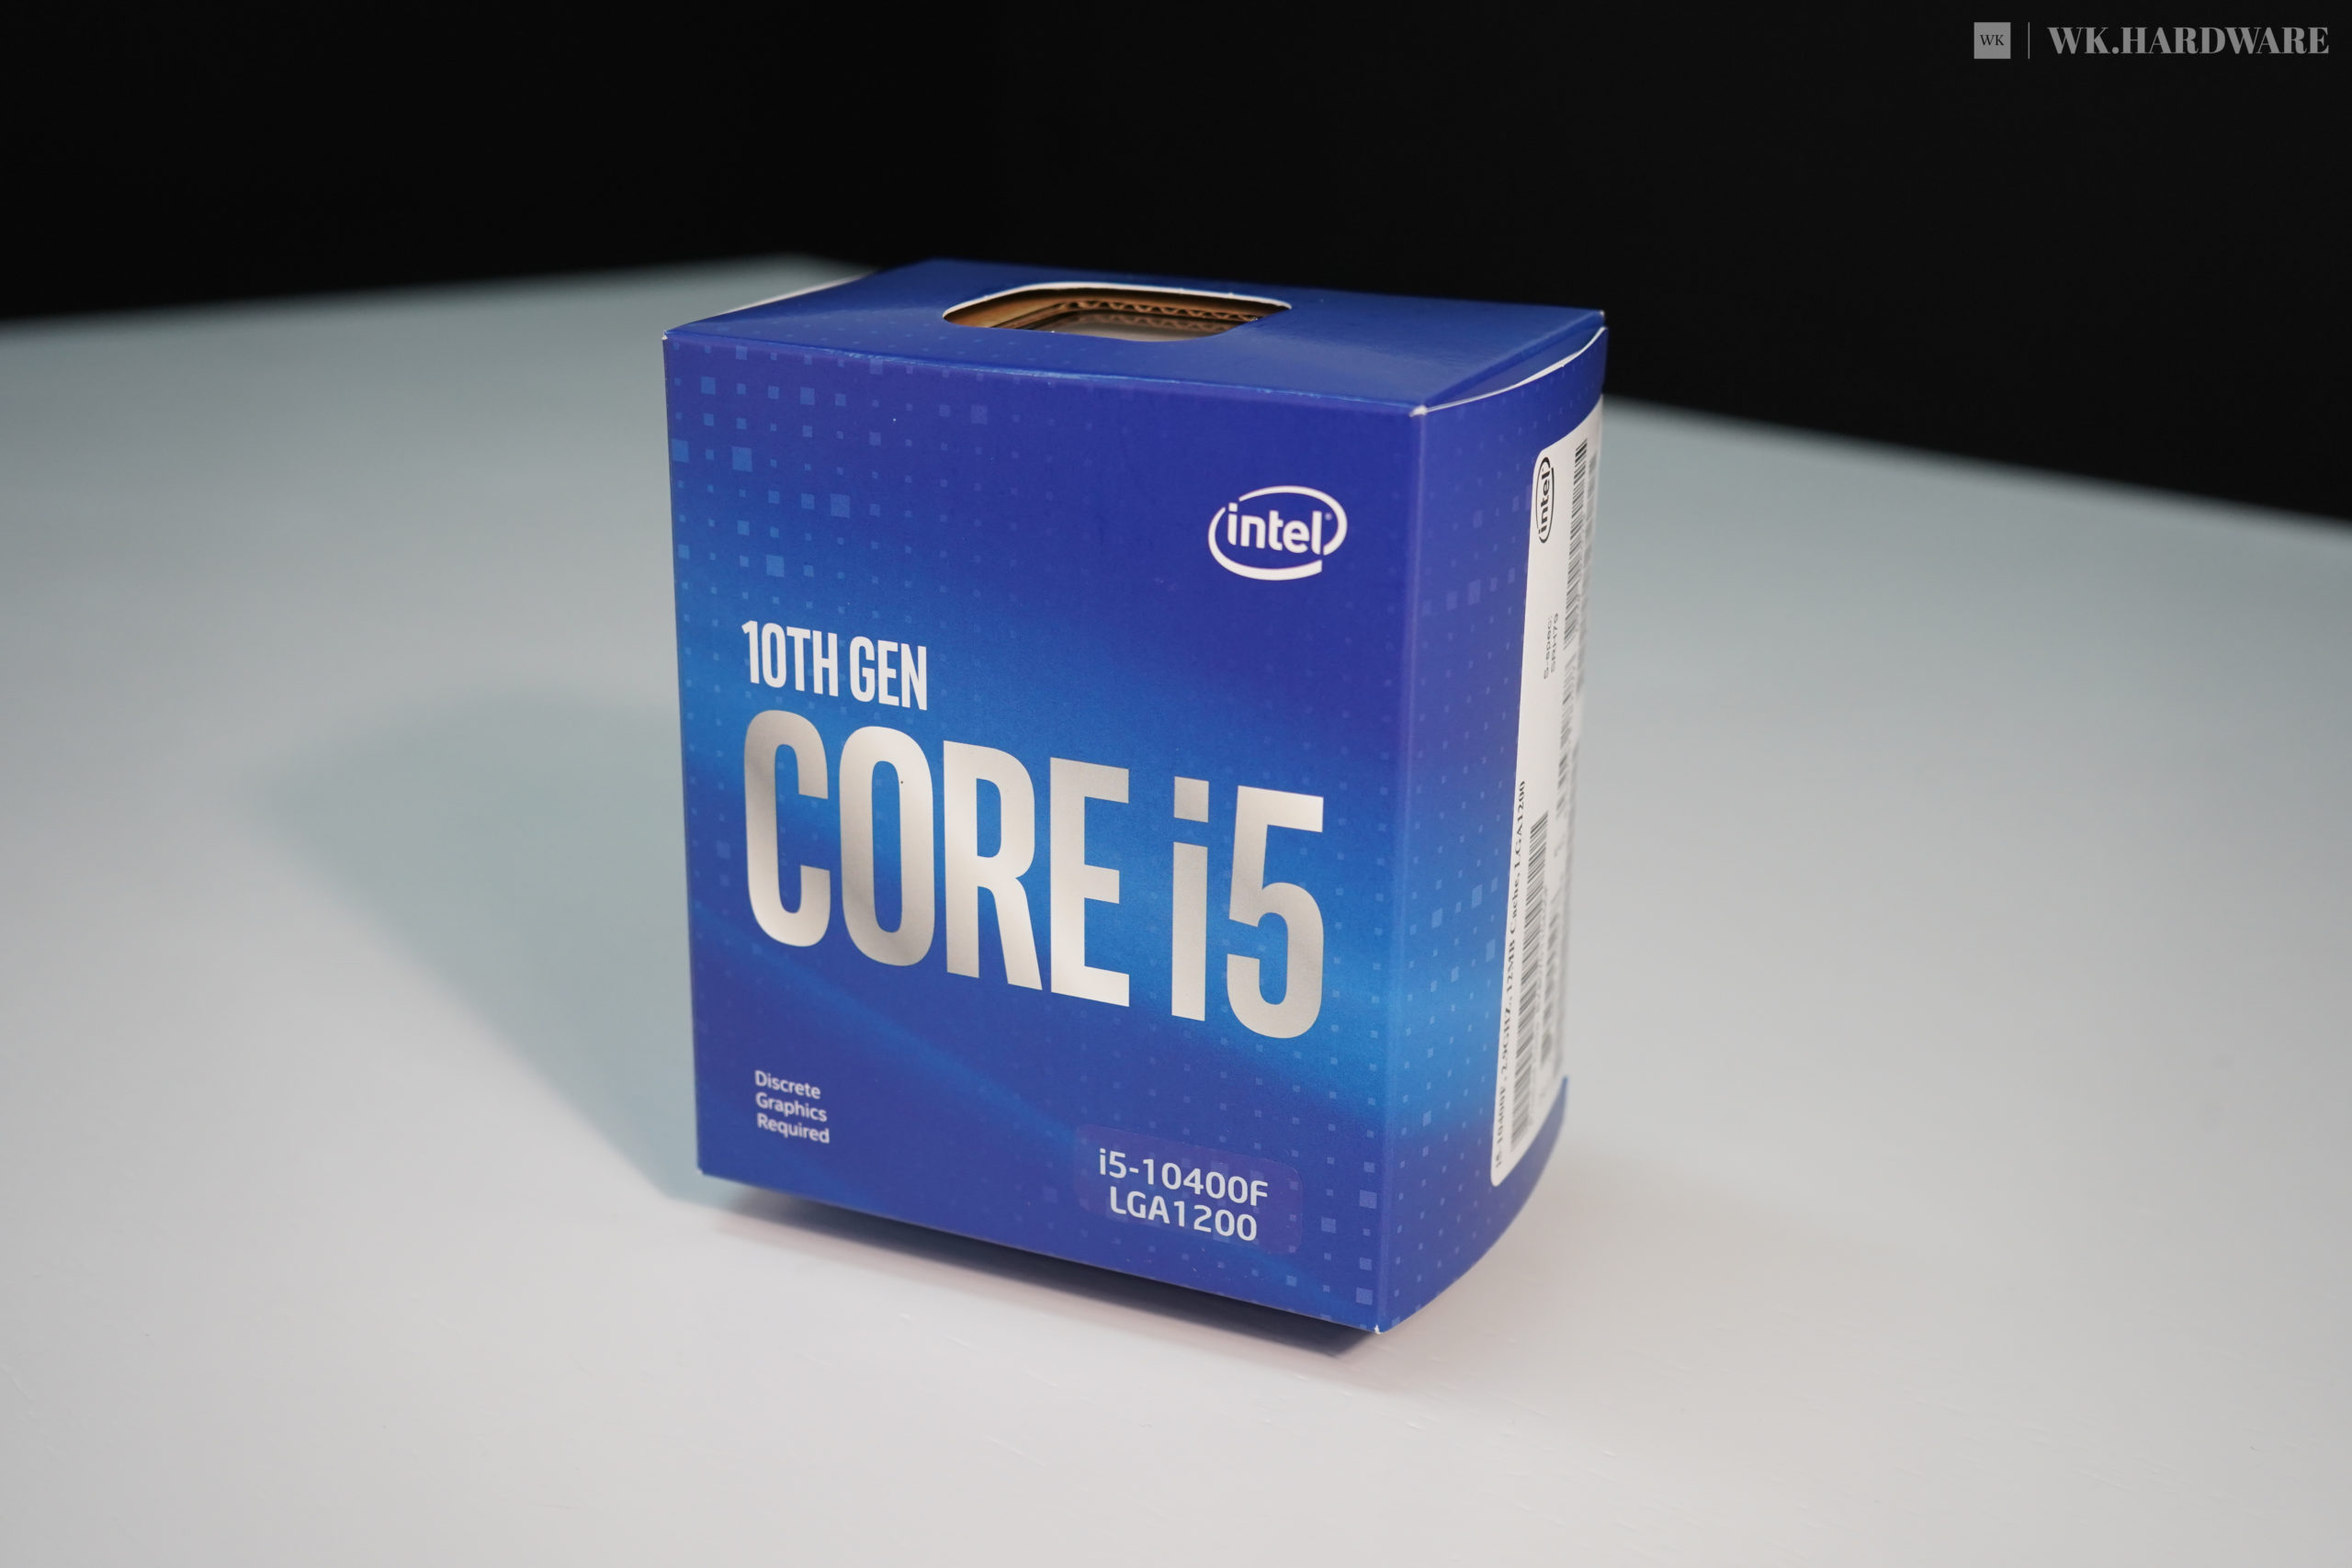 Intel core i5 10400f 2.9 ггц. Процессор Intel Core i5-10400f. Intel Core i5-10400f. S1200 Core i5 10400f (Comet Lake). S1200 Core i5 10400 (Comet Lake).